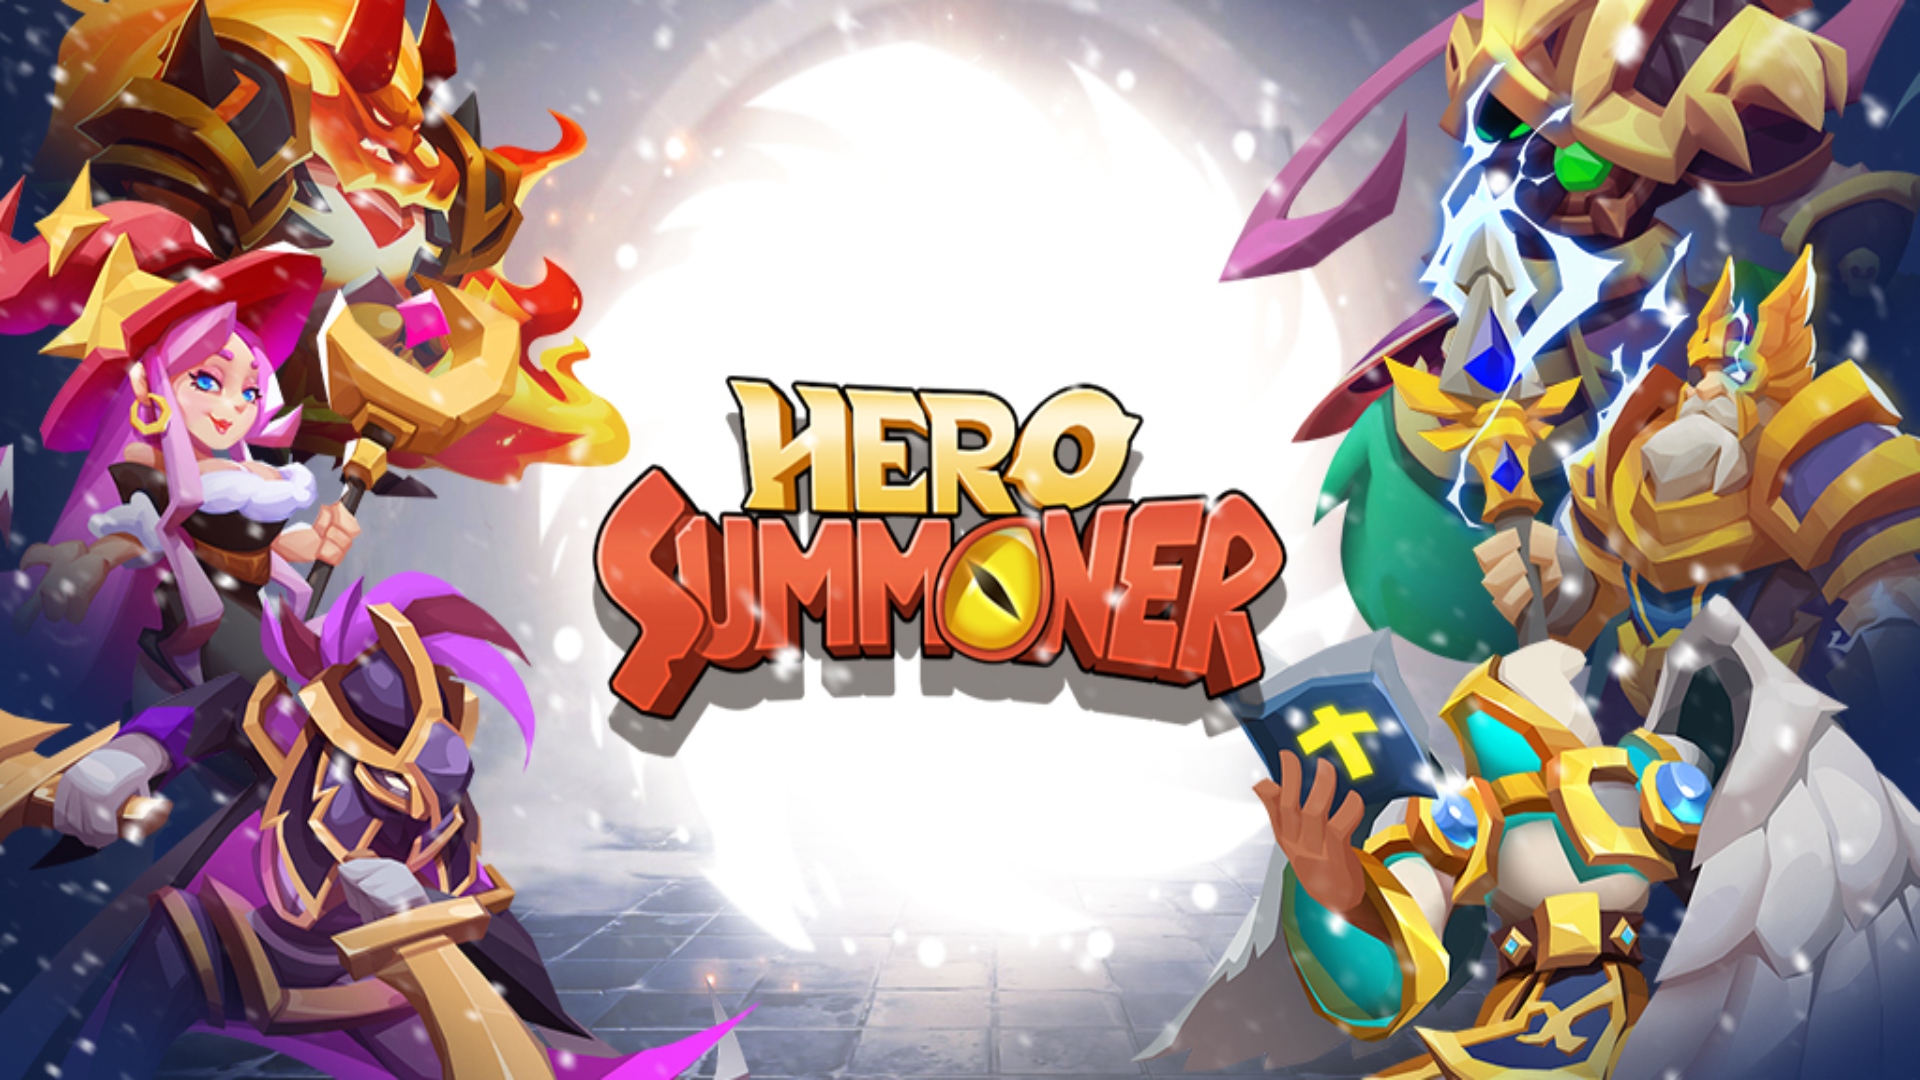 Characters and the Hero Summoner logo.